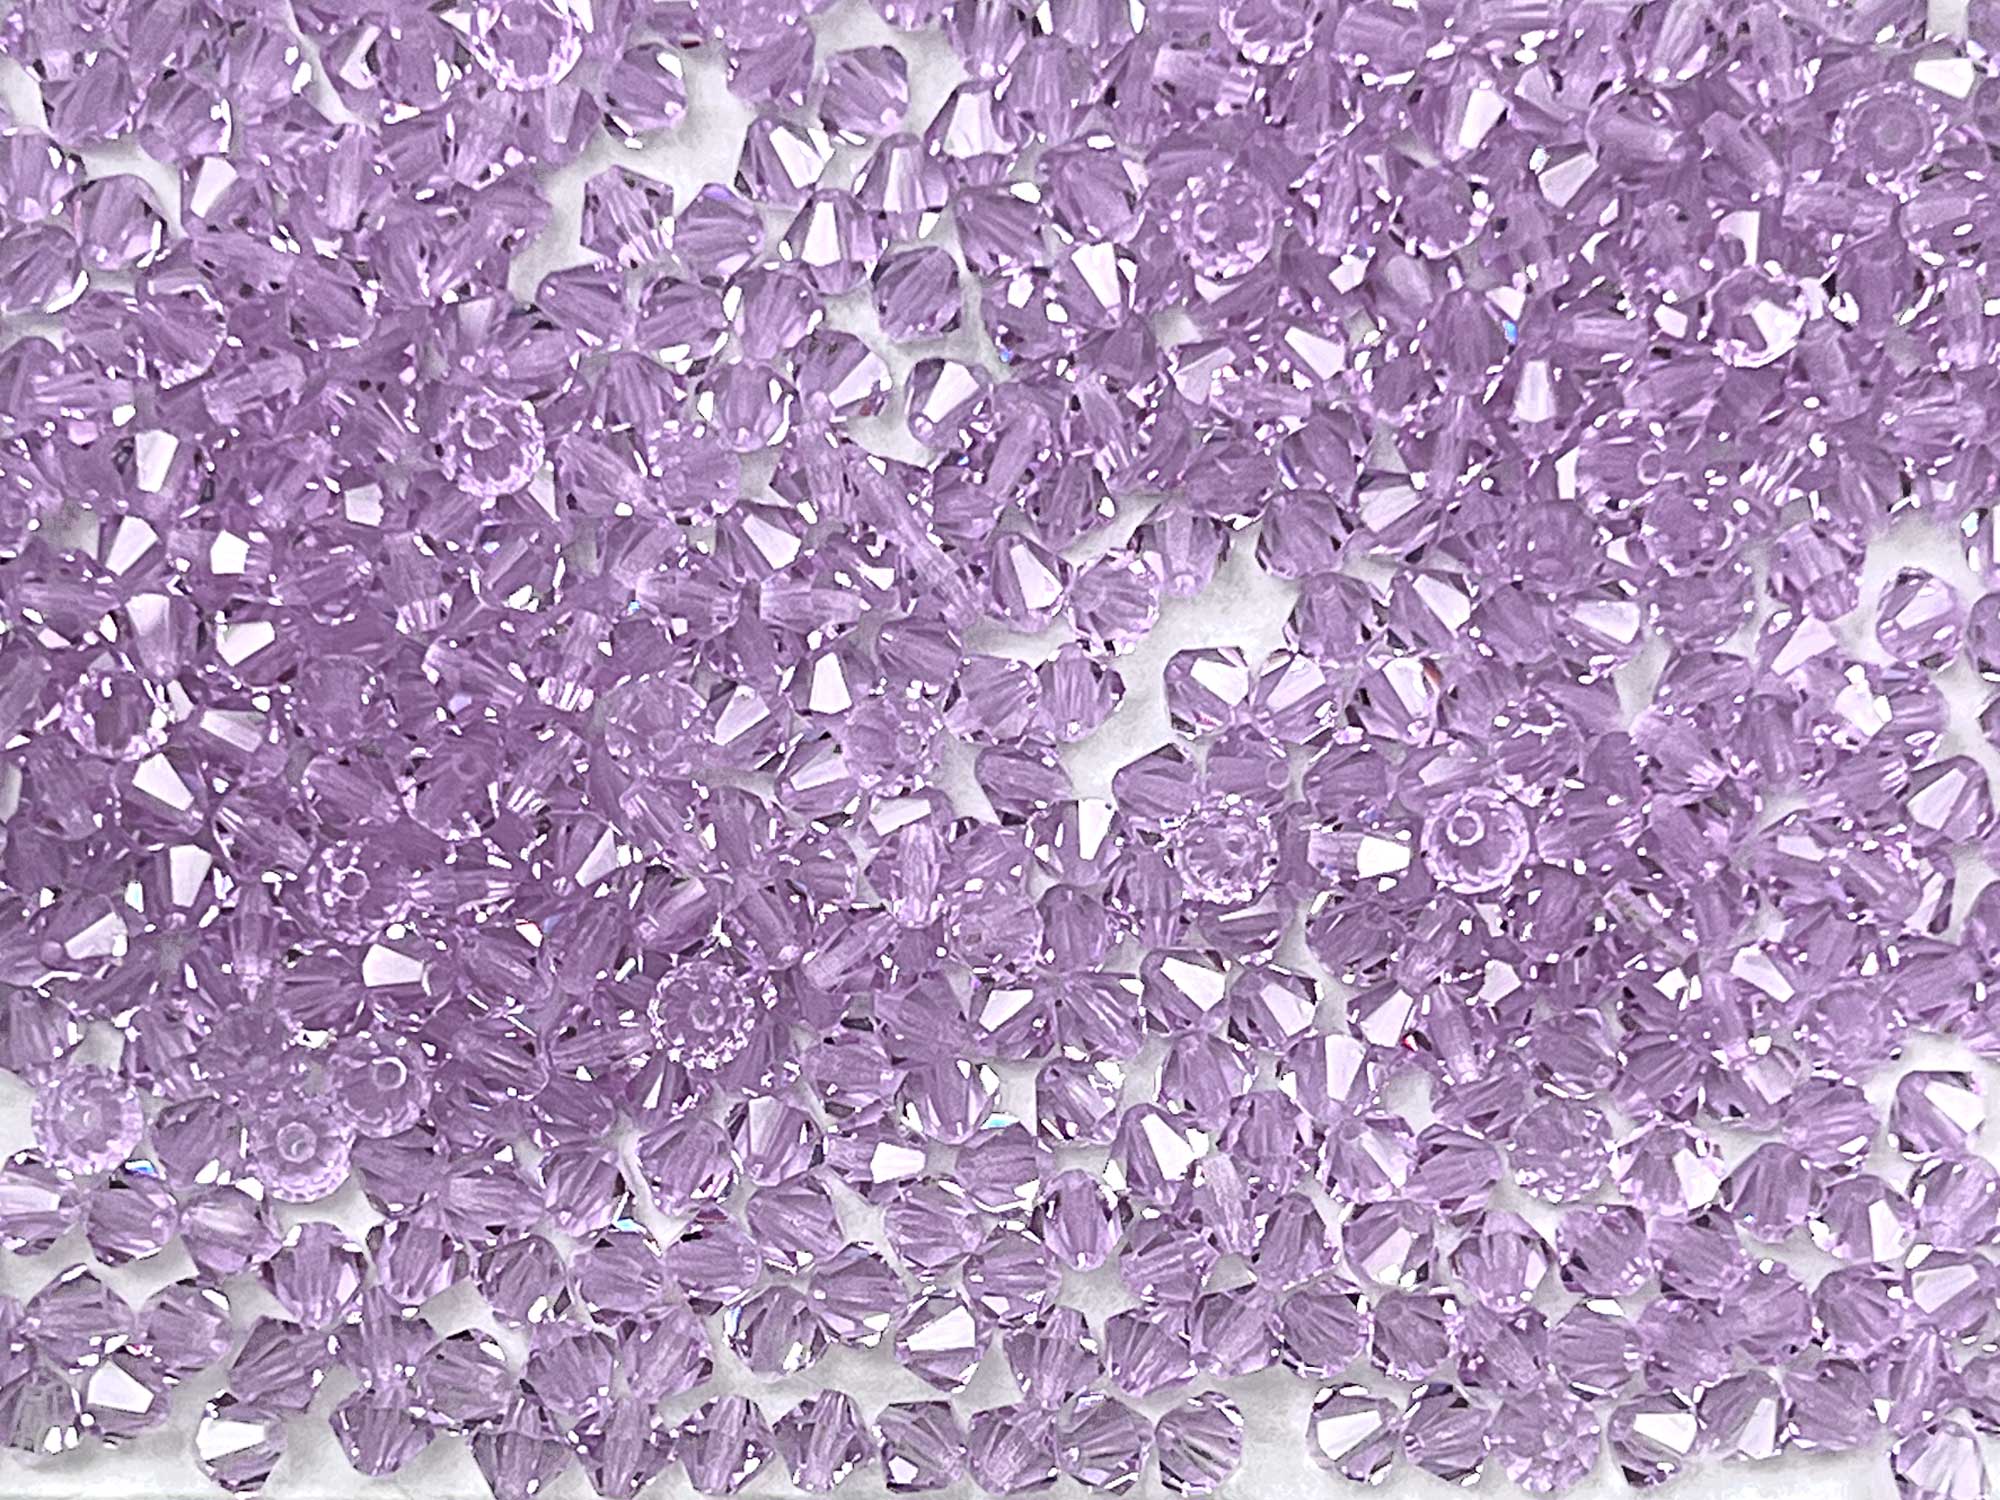 Violet Czech Glass Beads Machine Cut Bicones (MC Rondell Diamond Shape) transparent rich purple crystals 3mm 4mm 5mm 6mm 8mm